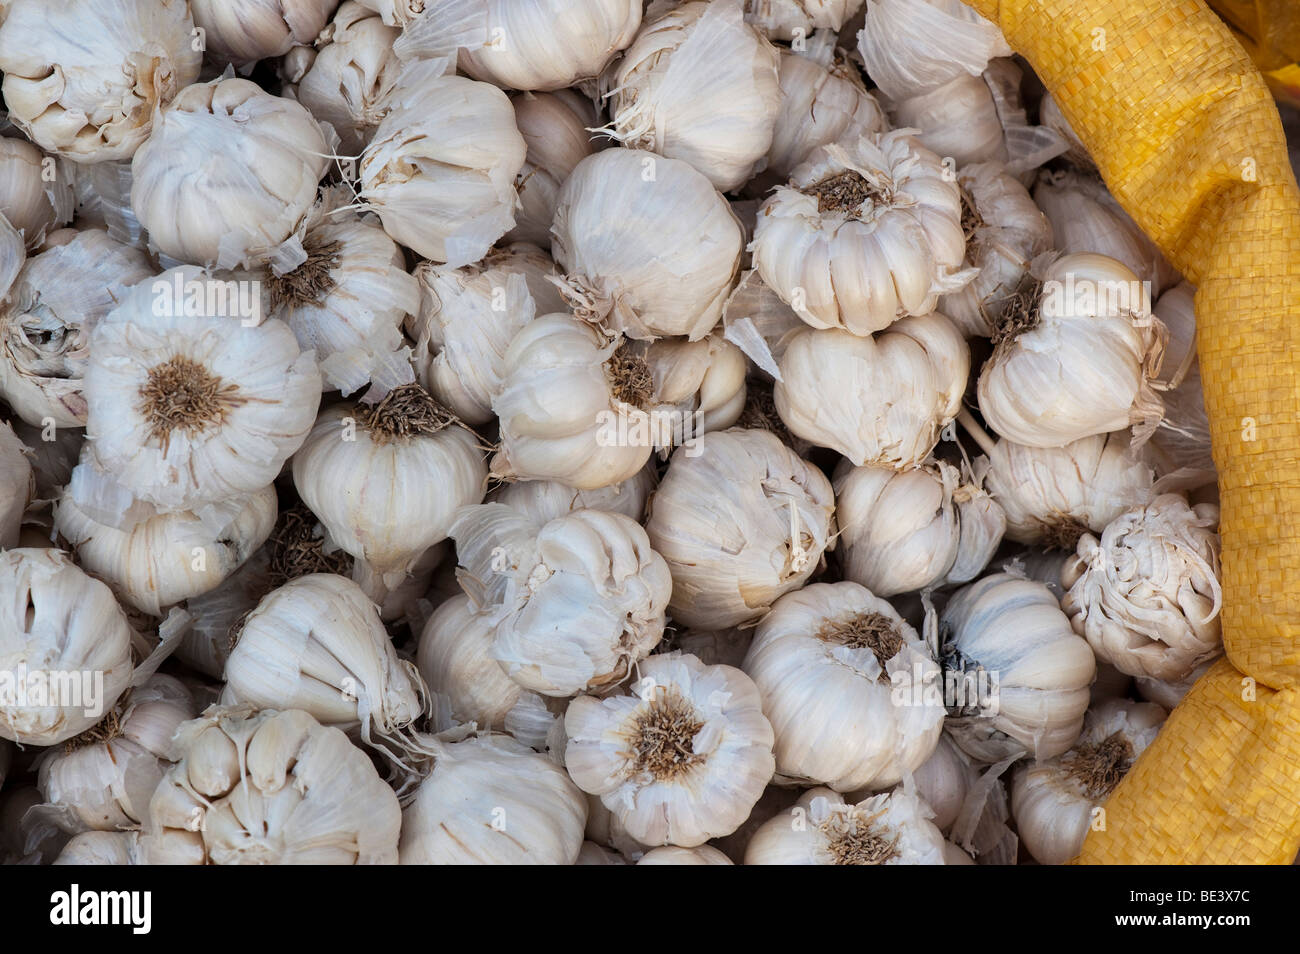 Sack of garlic cloves on at an Indian market. Andhra Pradesh, India Stock Photo